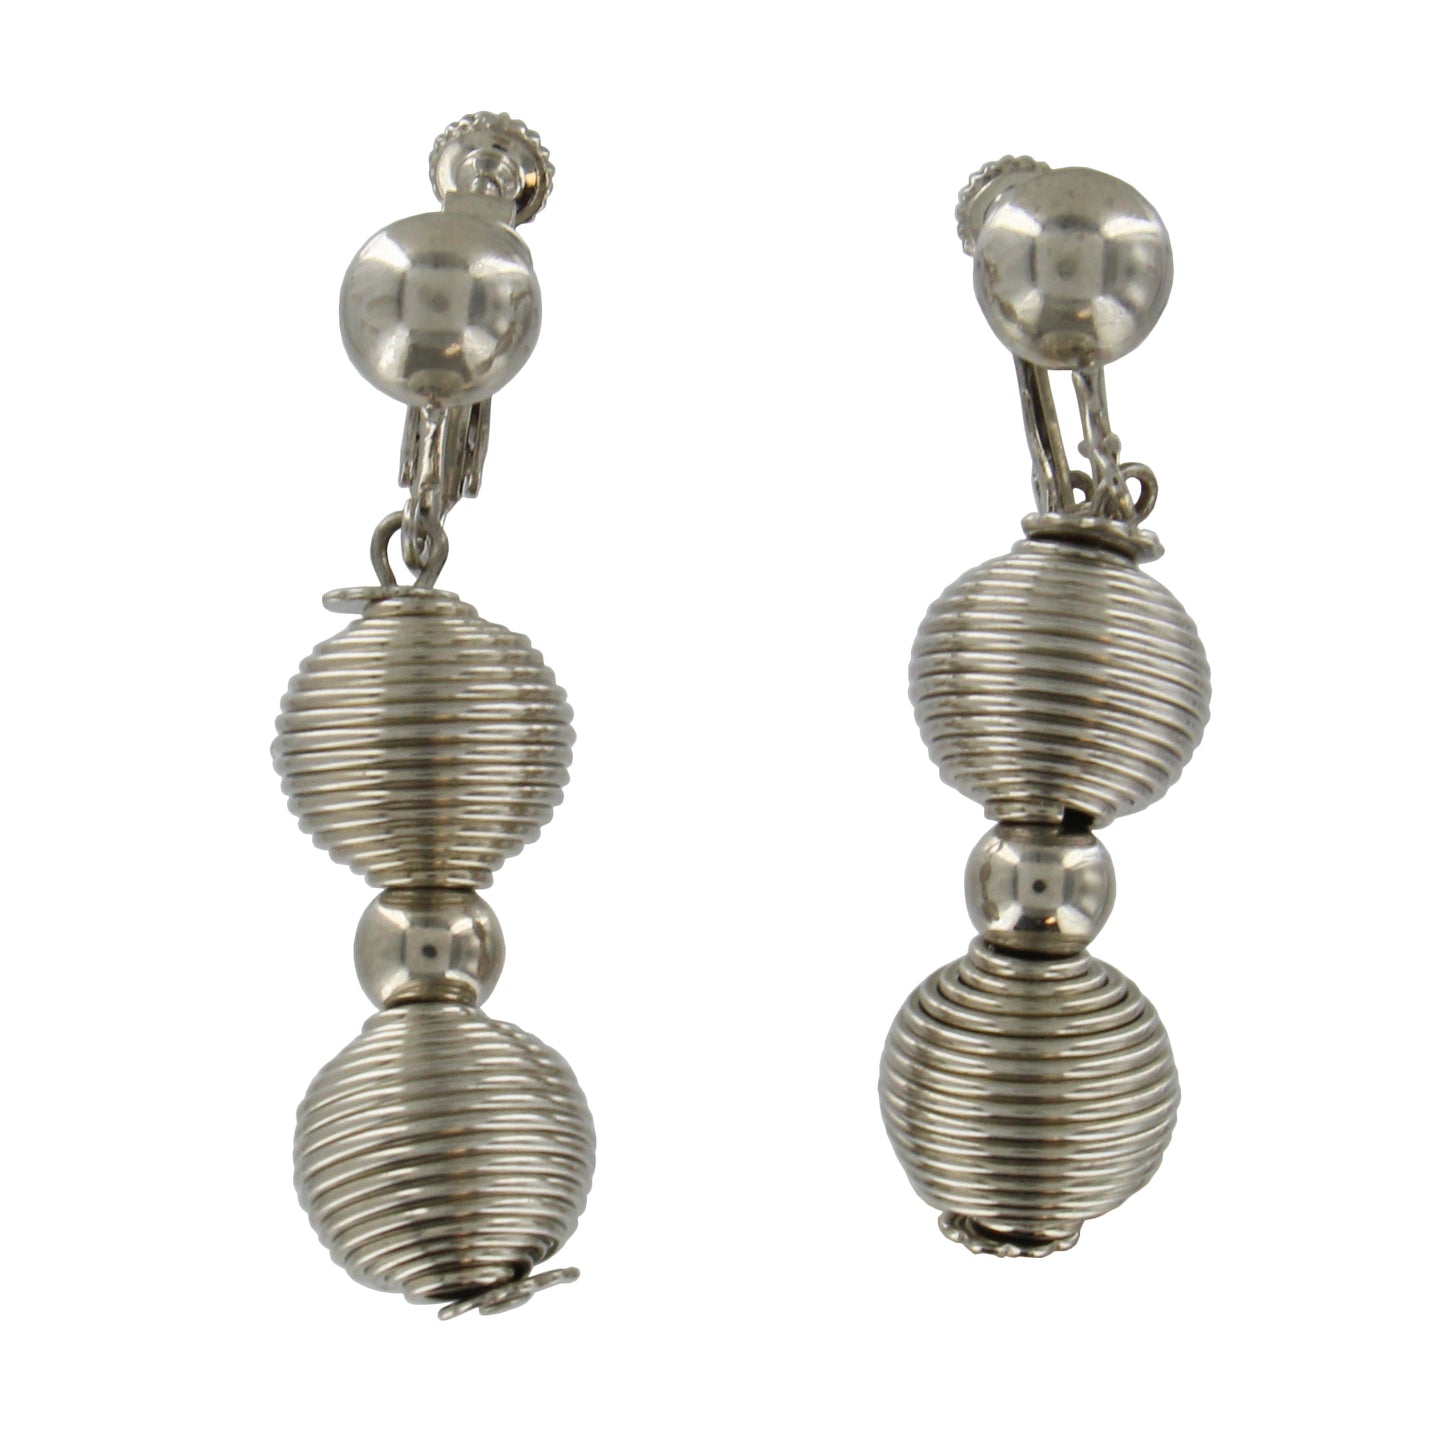 Kim Craftsmen Silver Tone Ribbed Textured Bead Screw Back Earrings 1 7/8"